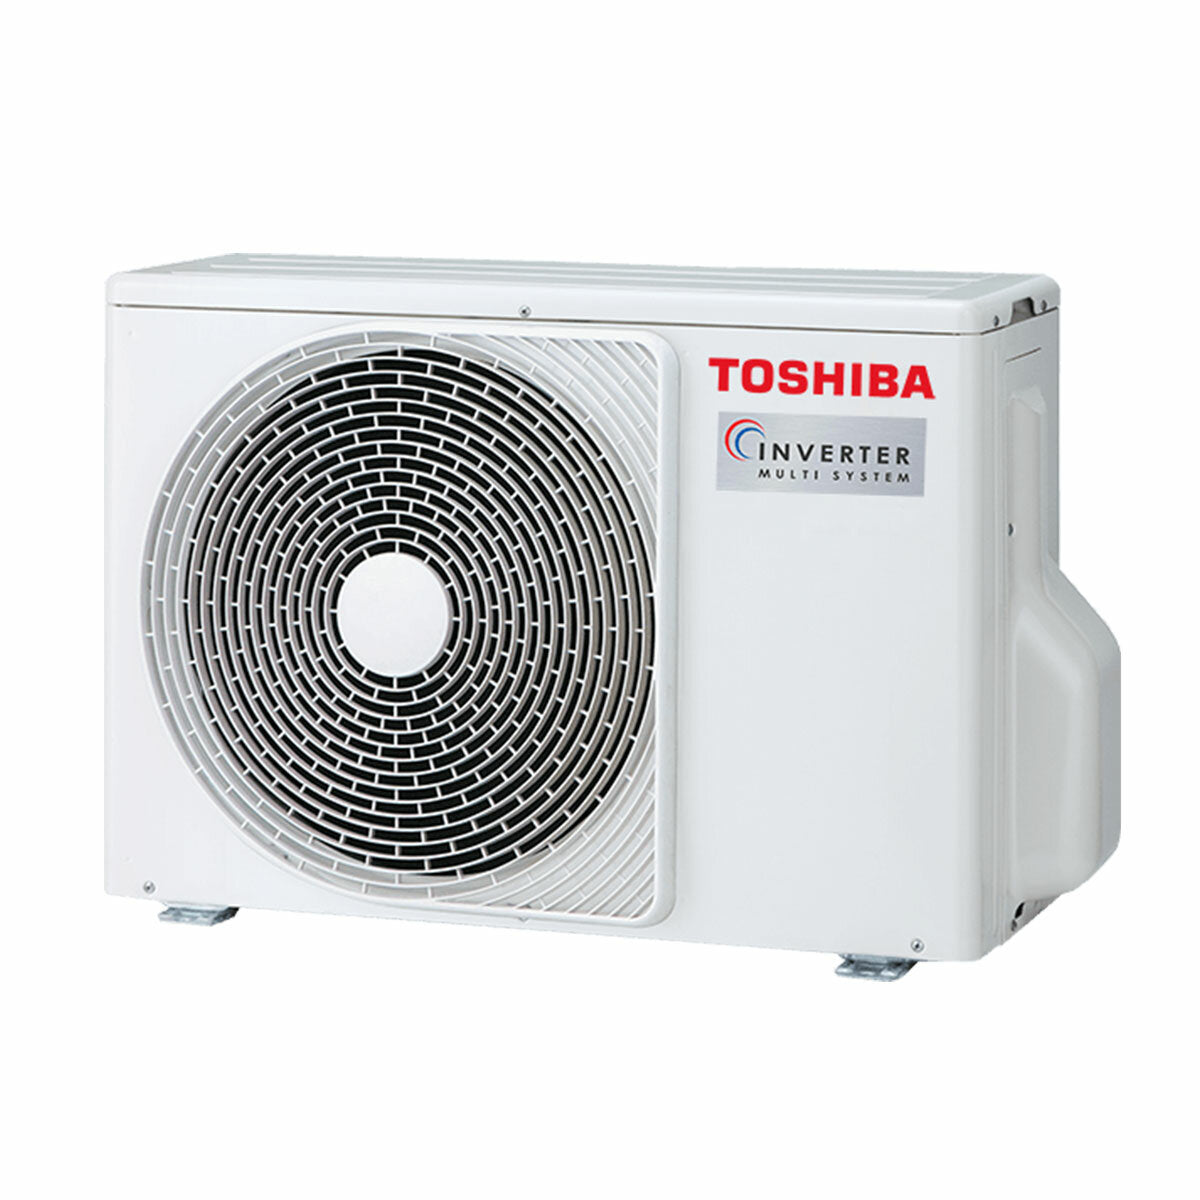 Toshiba ducted air conditioner U2 trial split 7000+9000+16000 BTU inverter A+++ external unit 5.2 kW